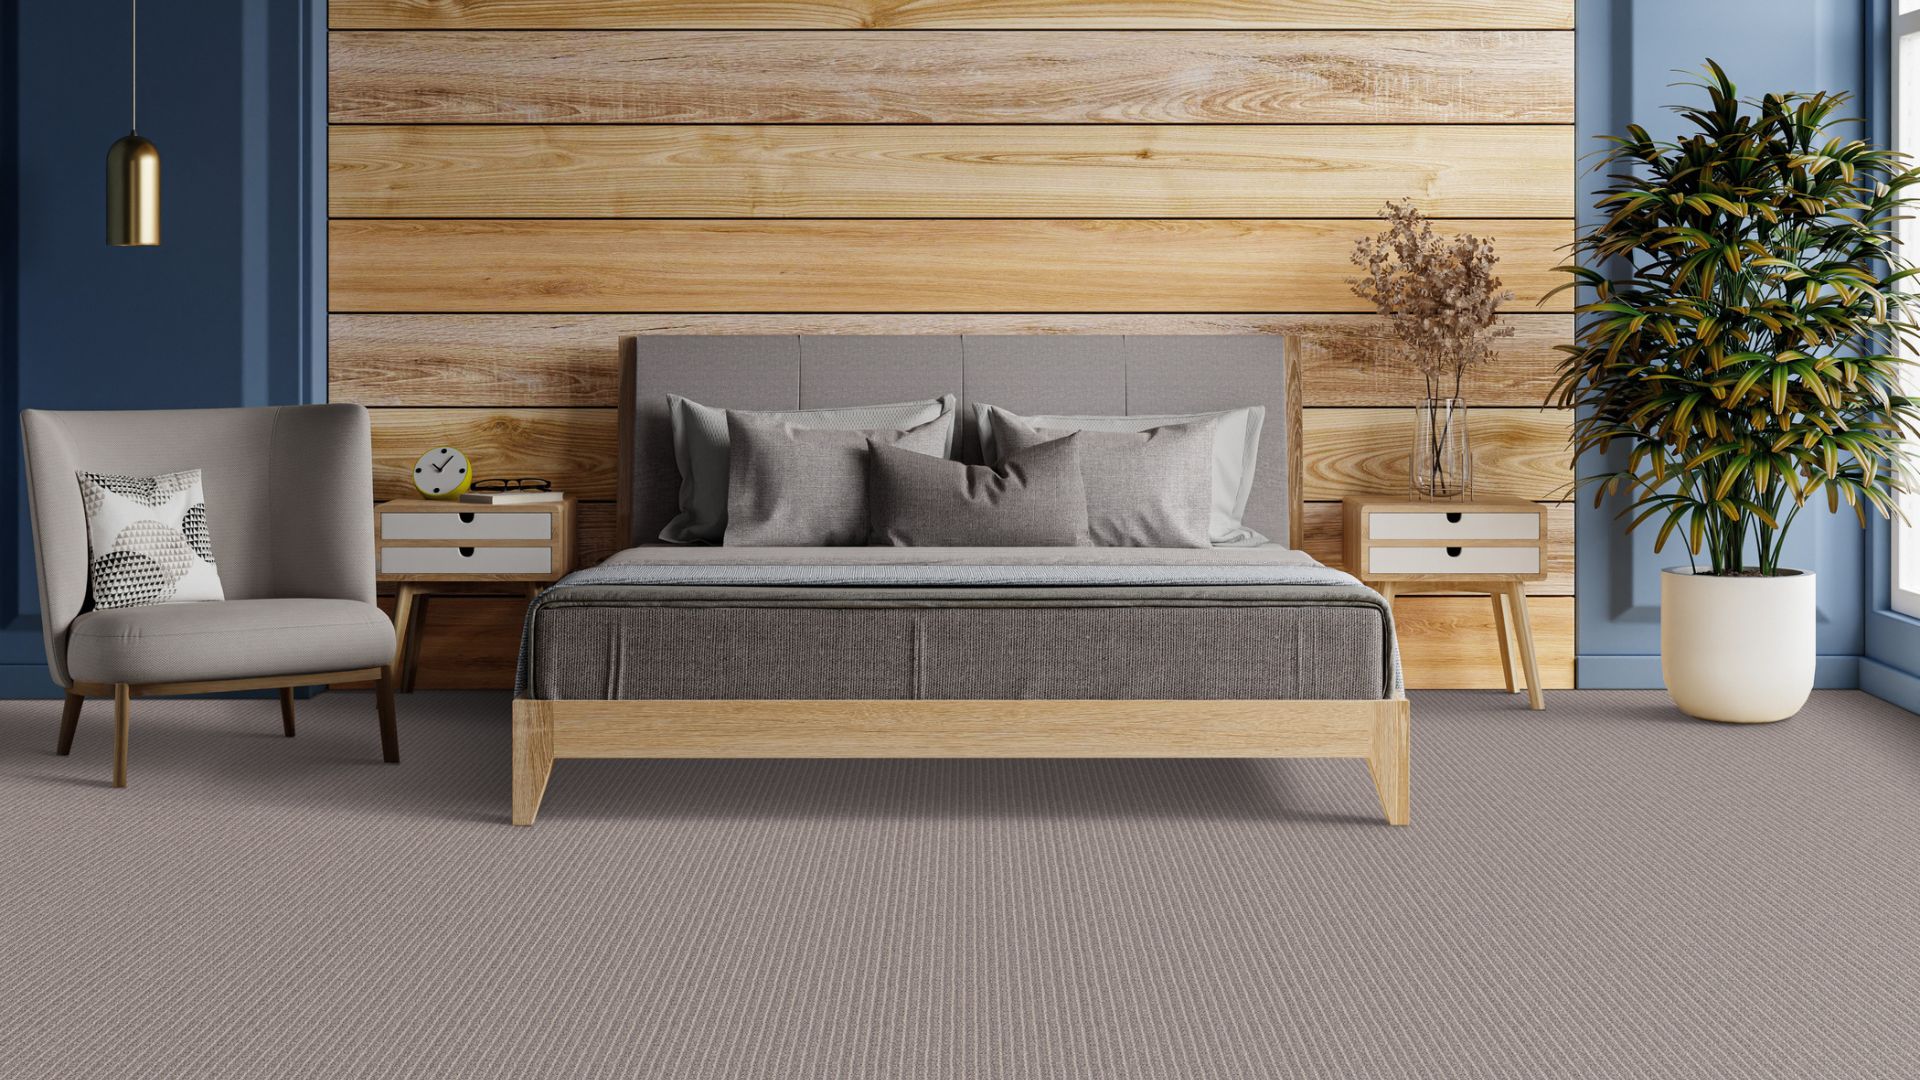 Carpet flooring in a bedroom.